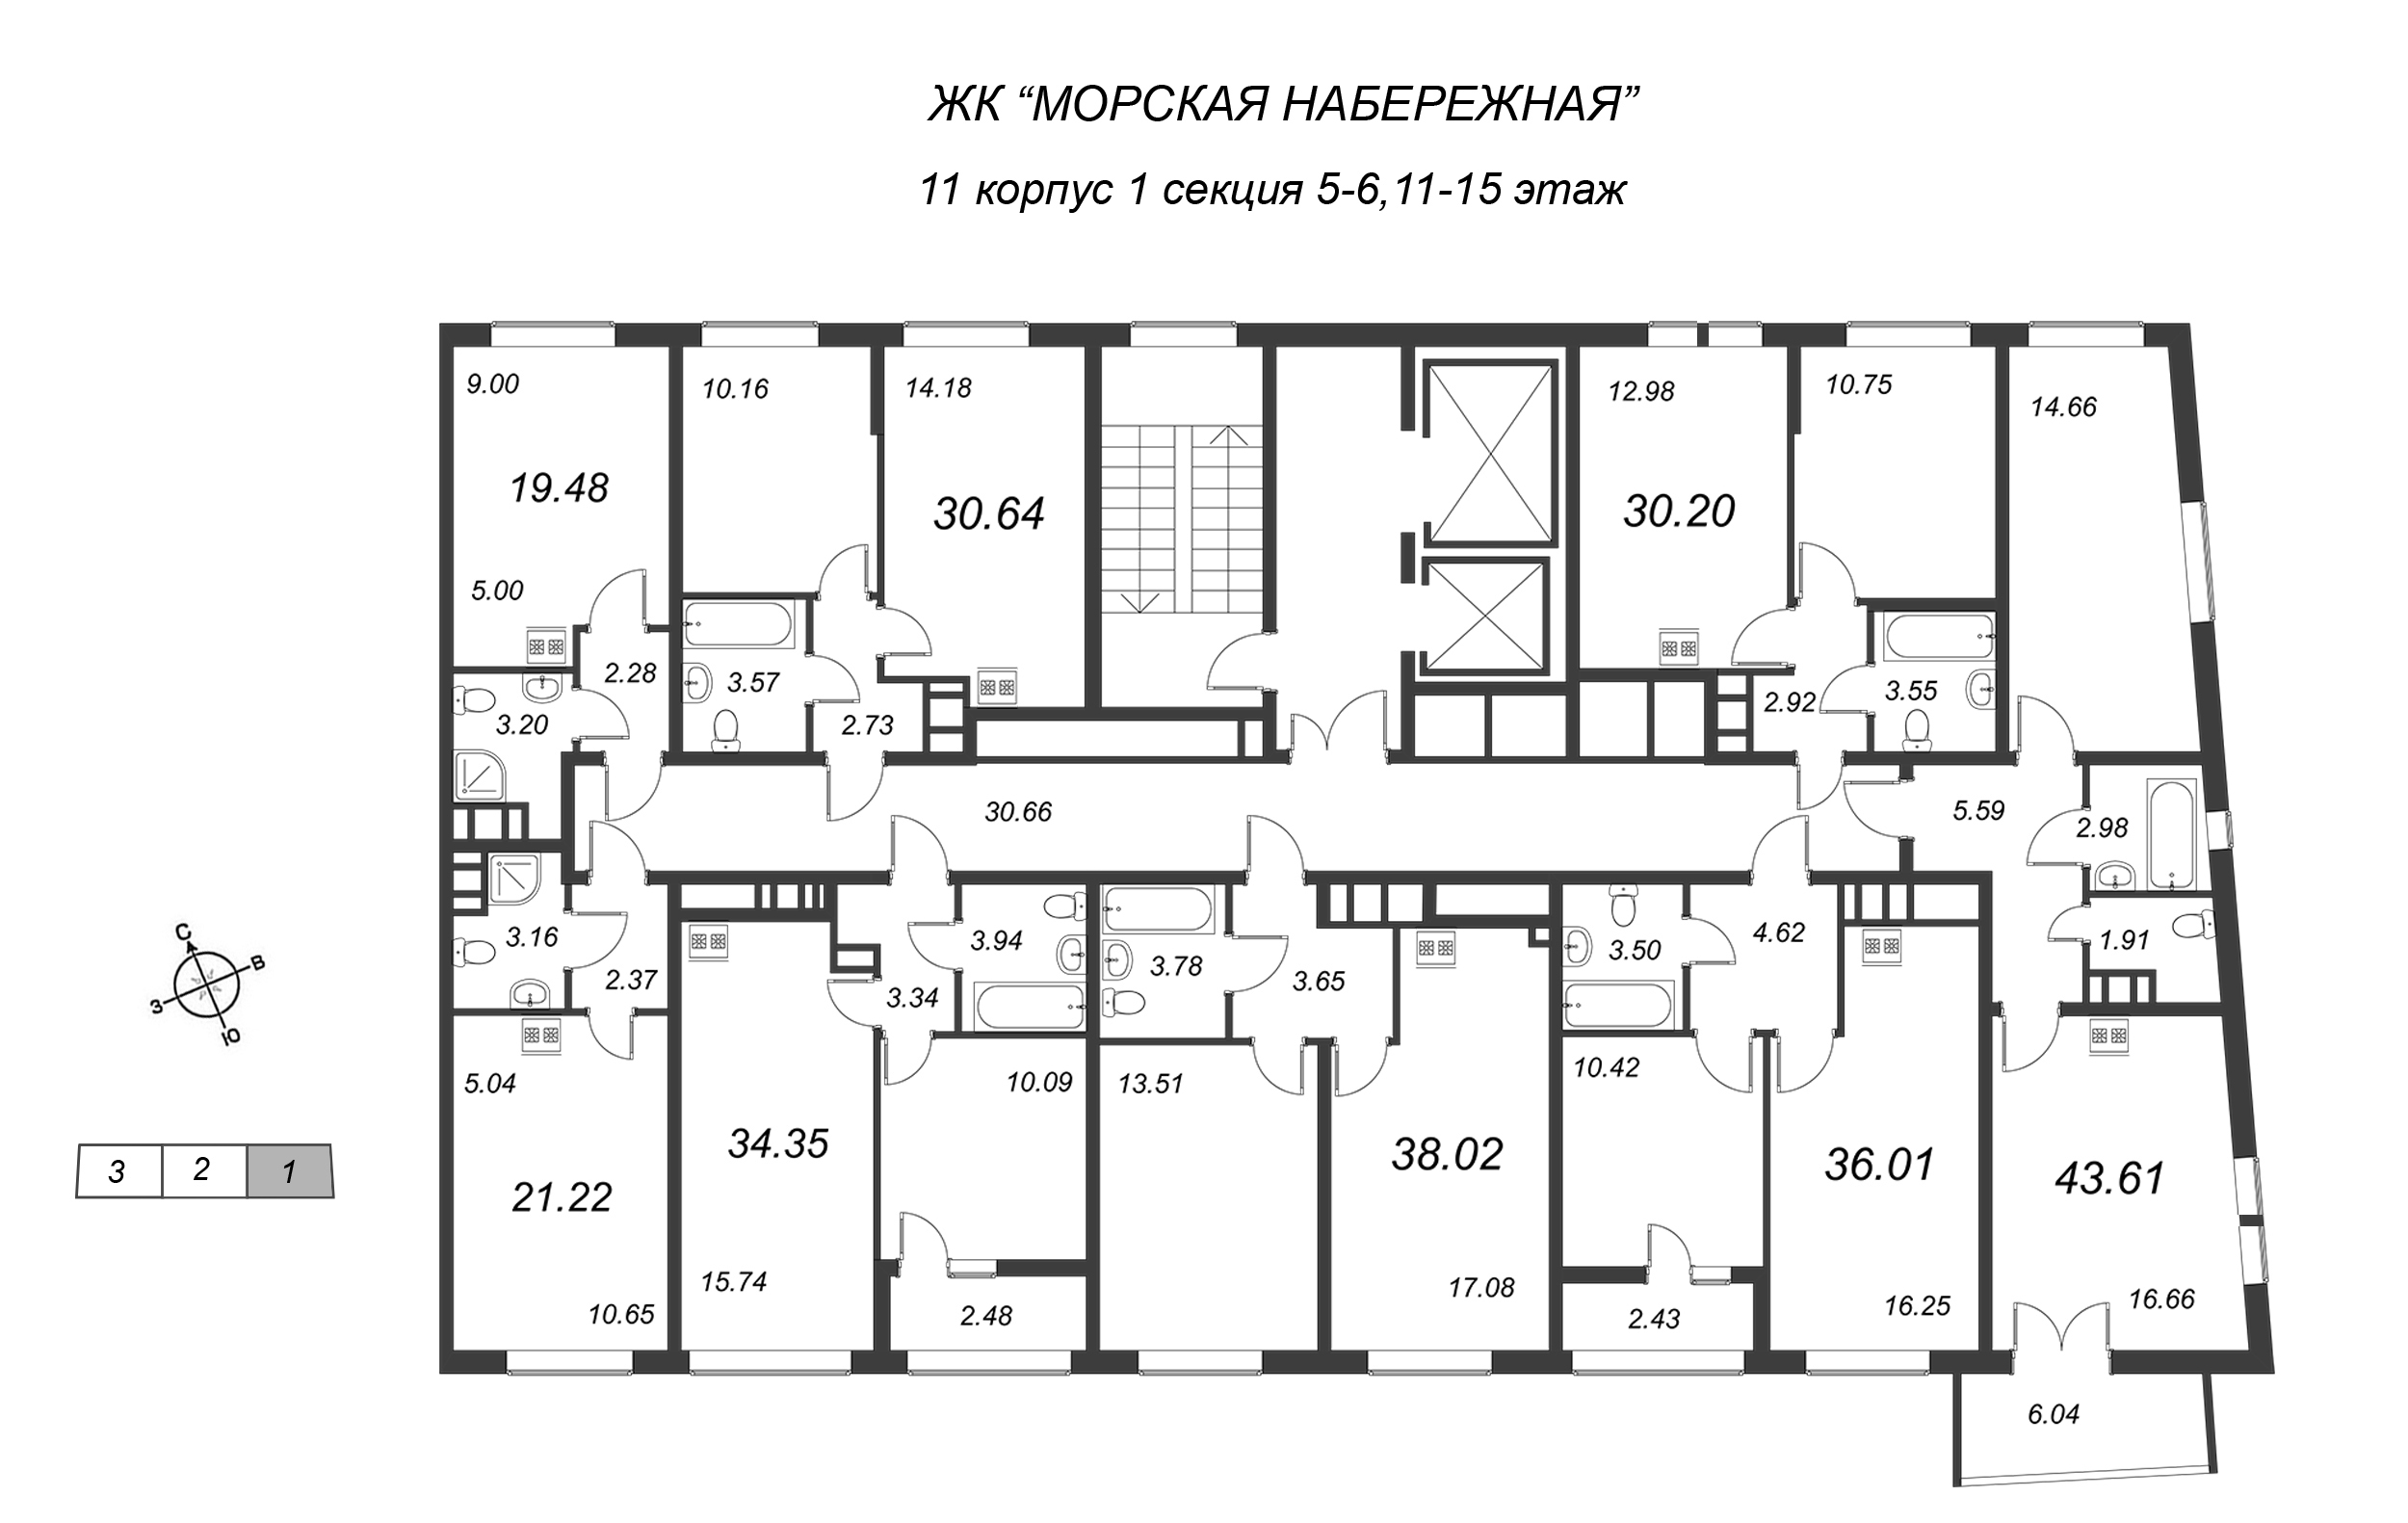 2-комнатная (Евро) квартира, 36.01 м² - планировка этажа